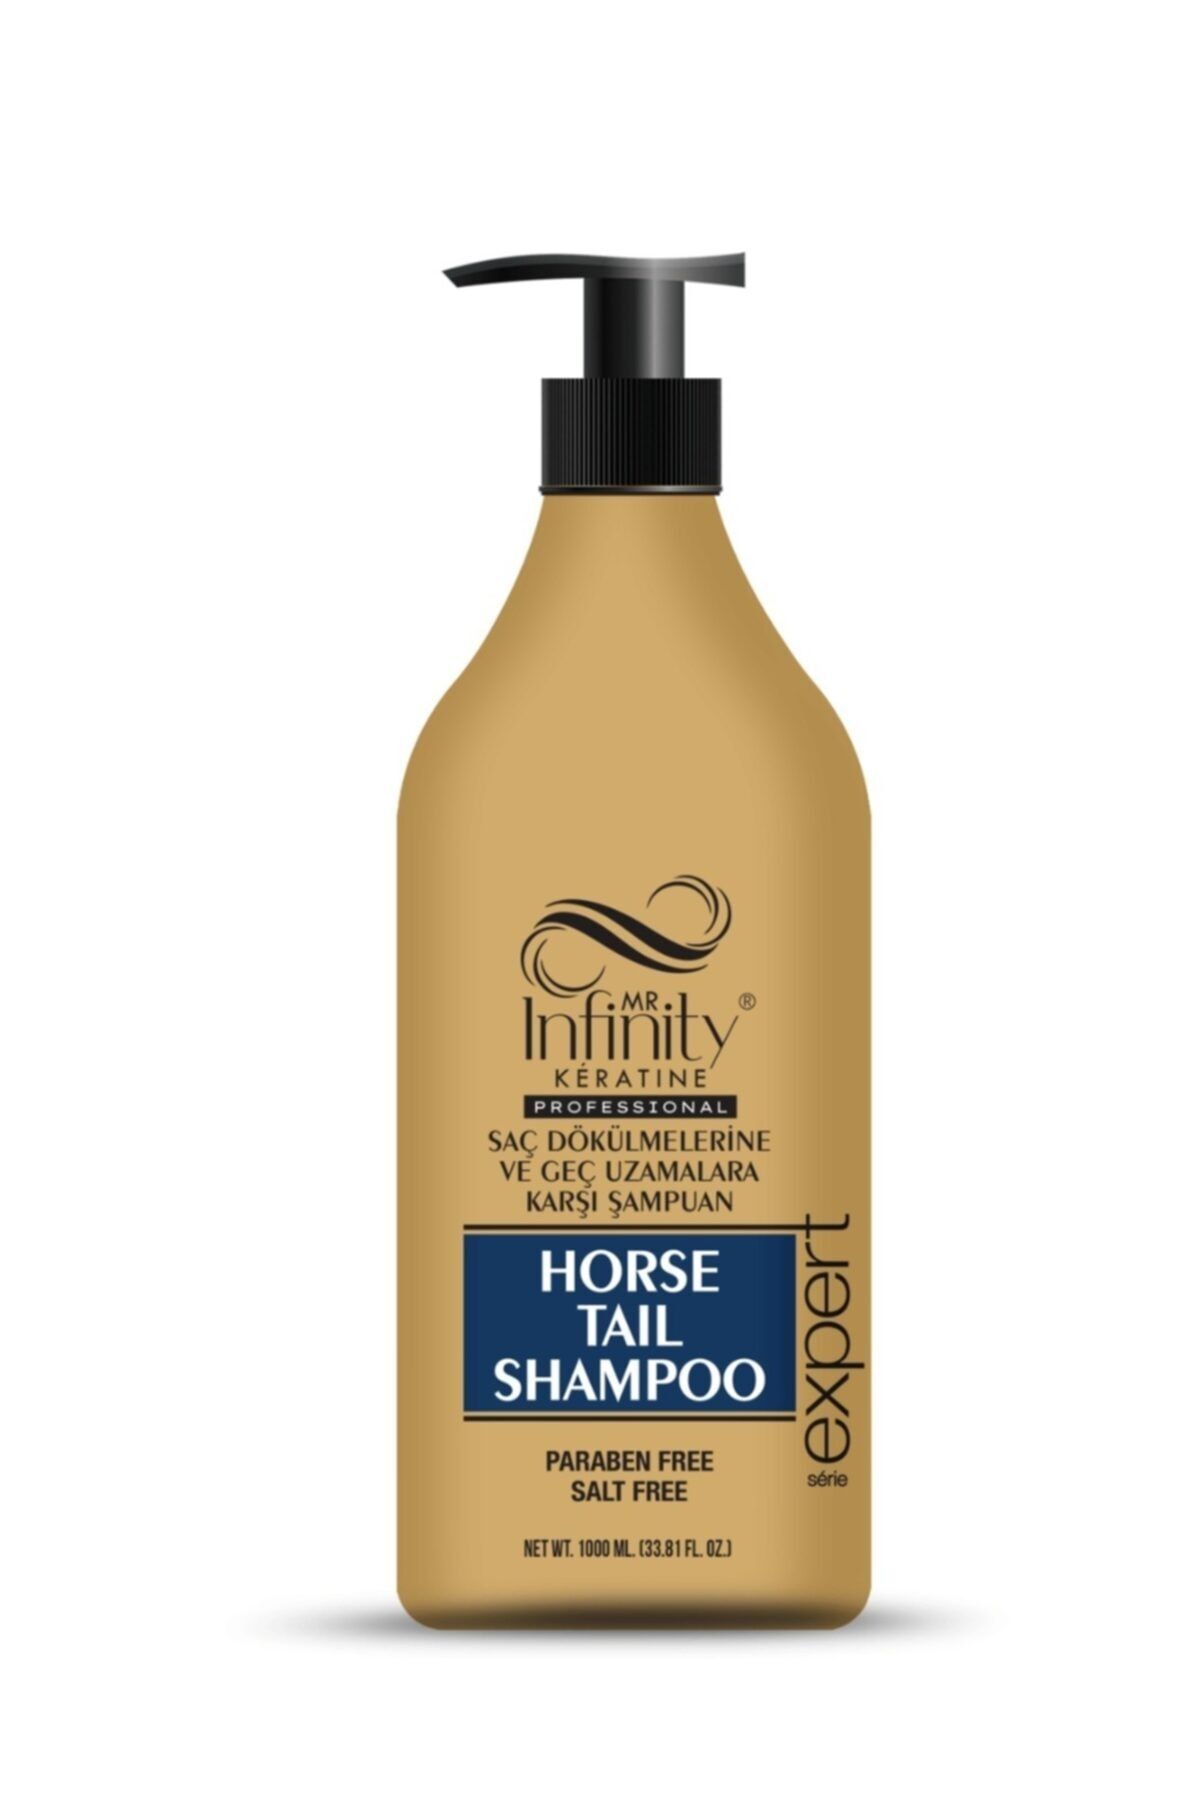 mr infinity Infinity At Kuyruğu Şampuan & Horse Taıl Shampoo 1000ml